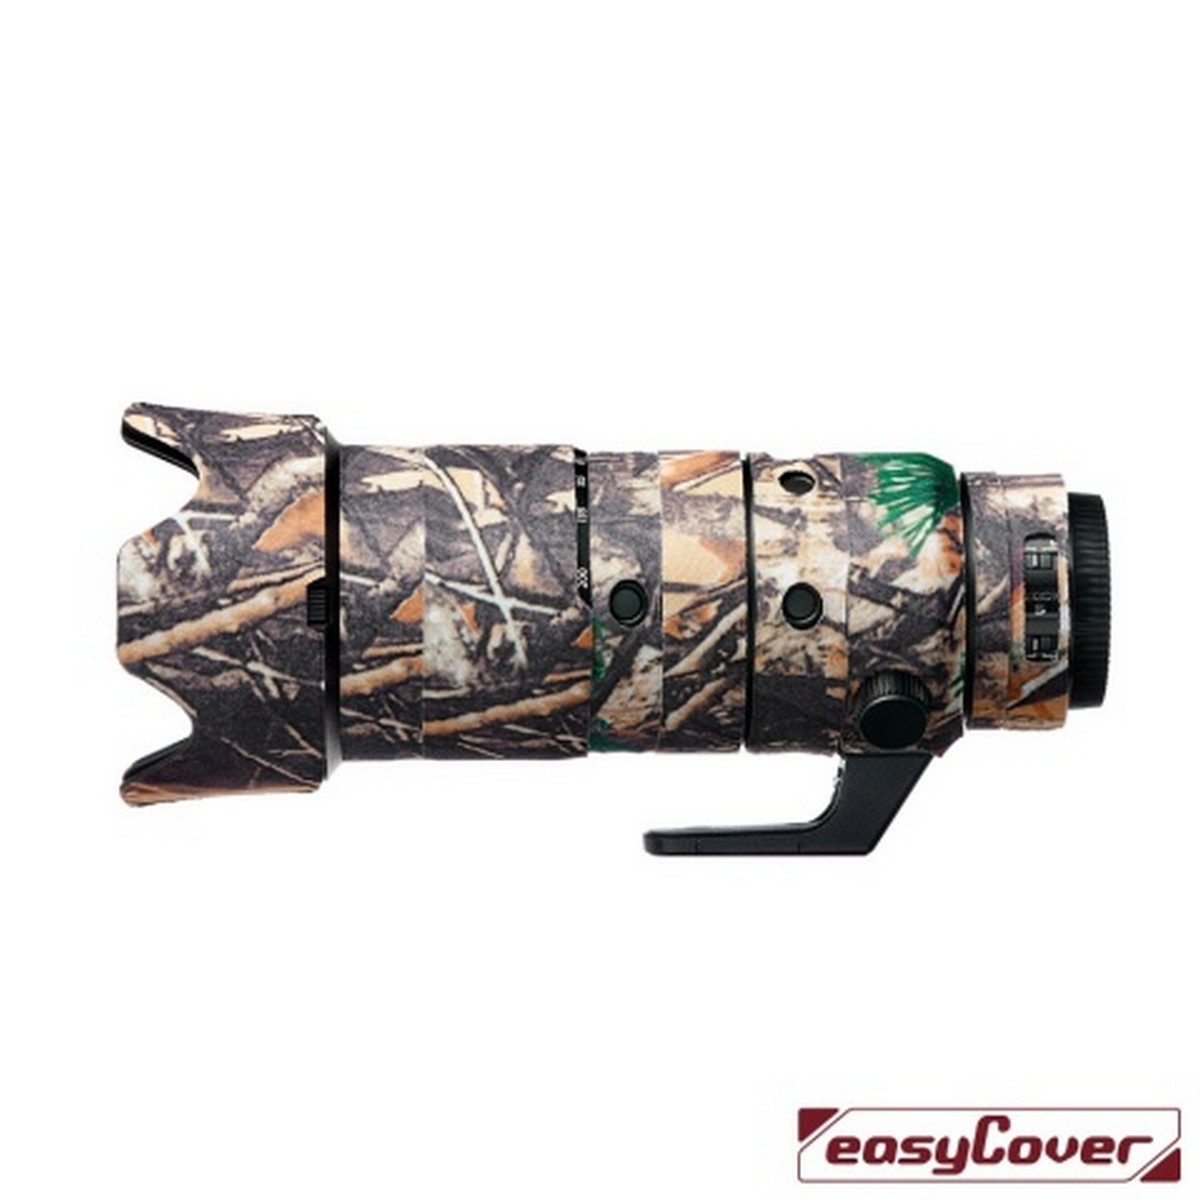 Easycover Lens Oak Objektivschutz für Nikkor Z 70-200 mm 1:2,8 VR S Forest Camouflage